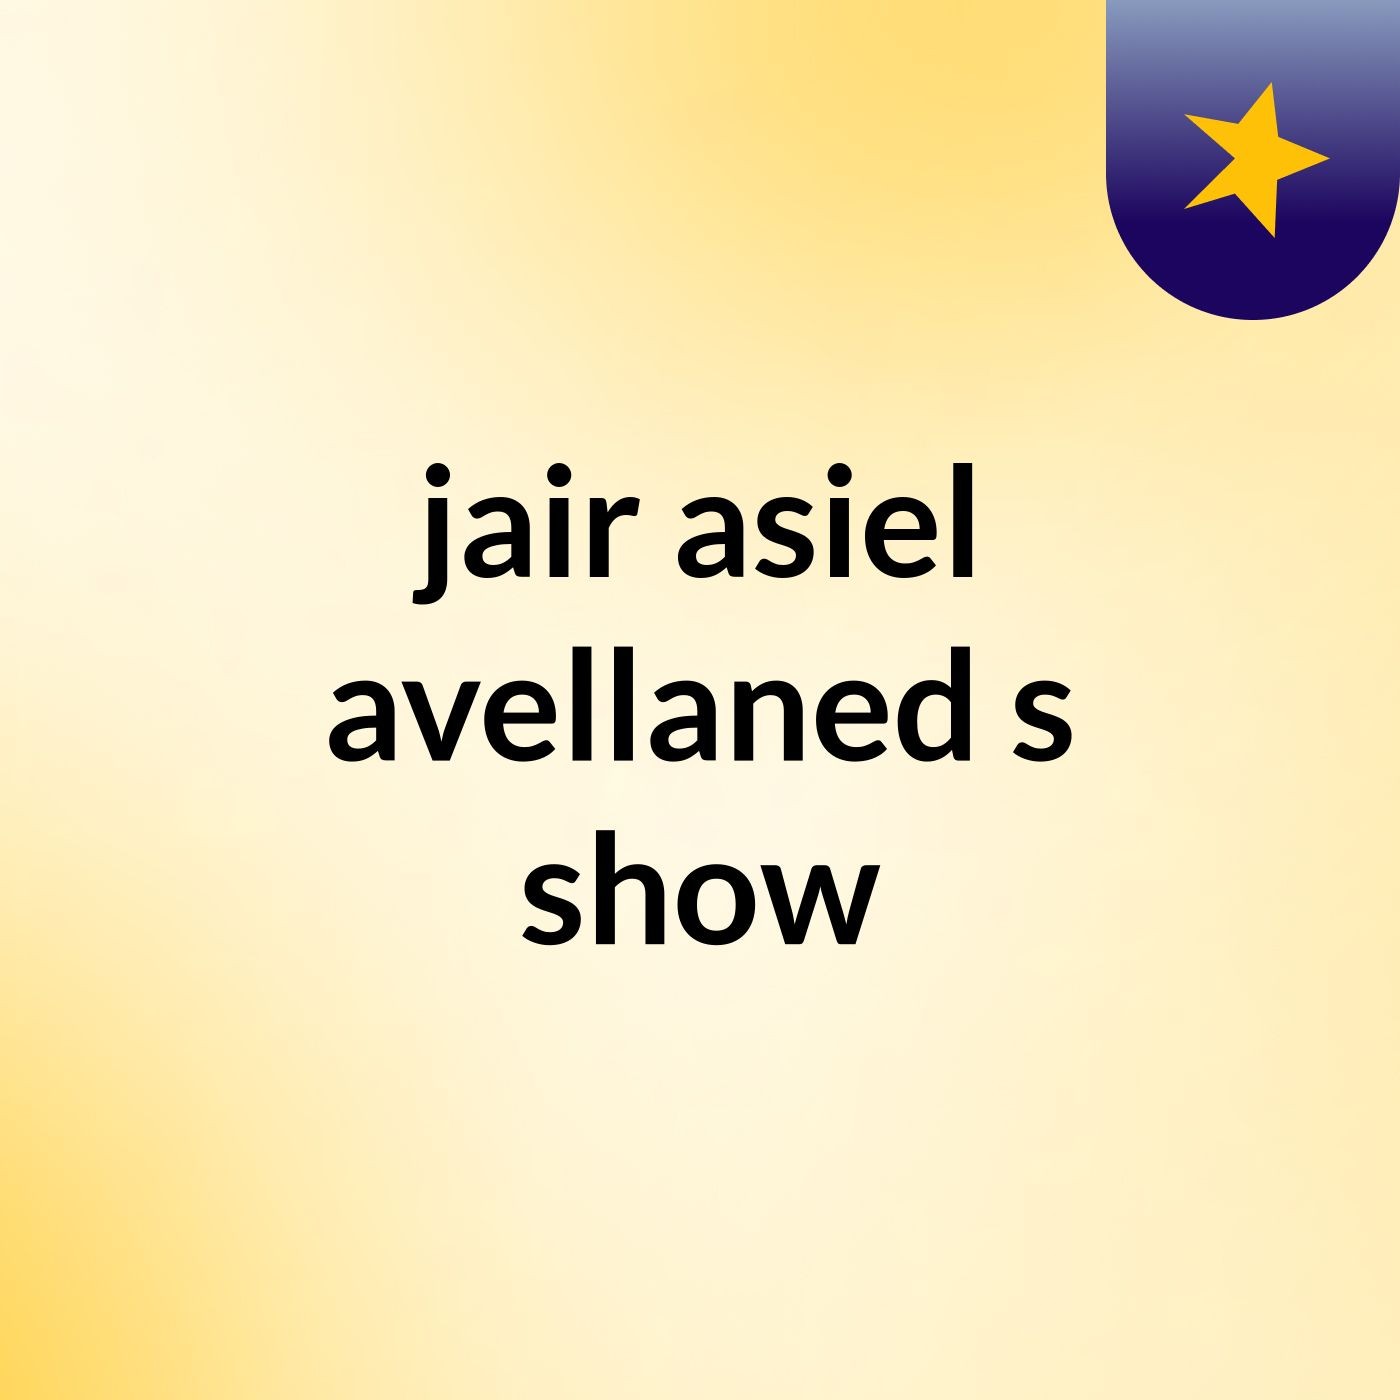 jair asiel avellaned's show